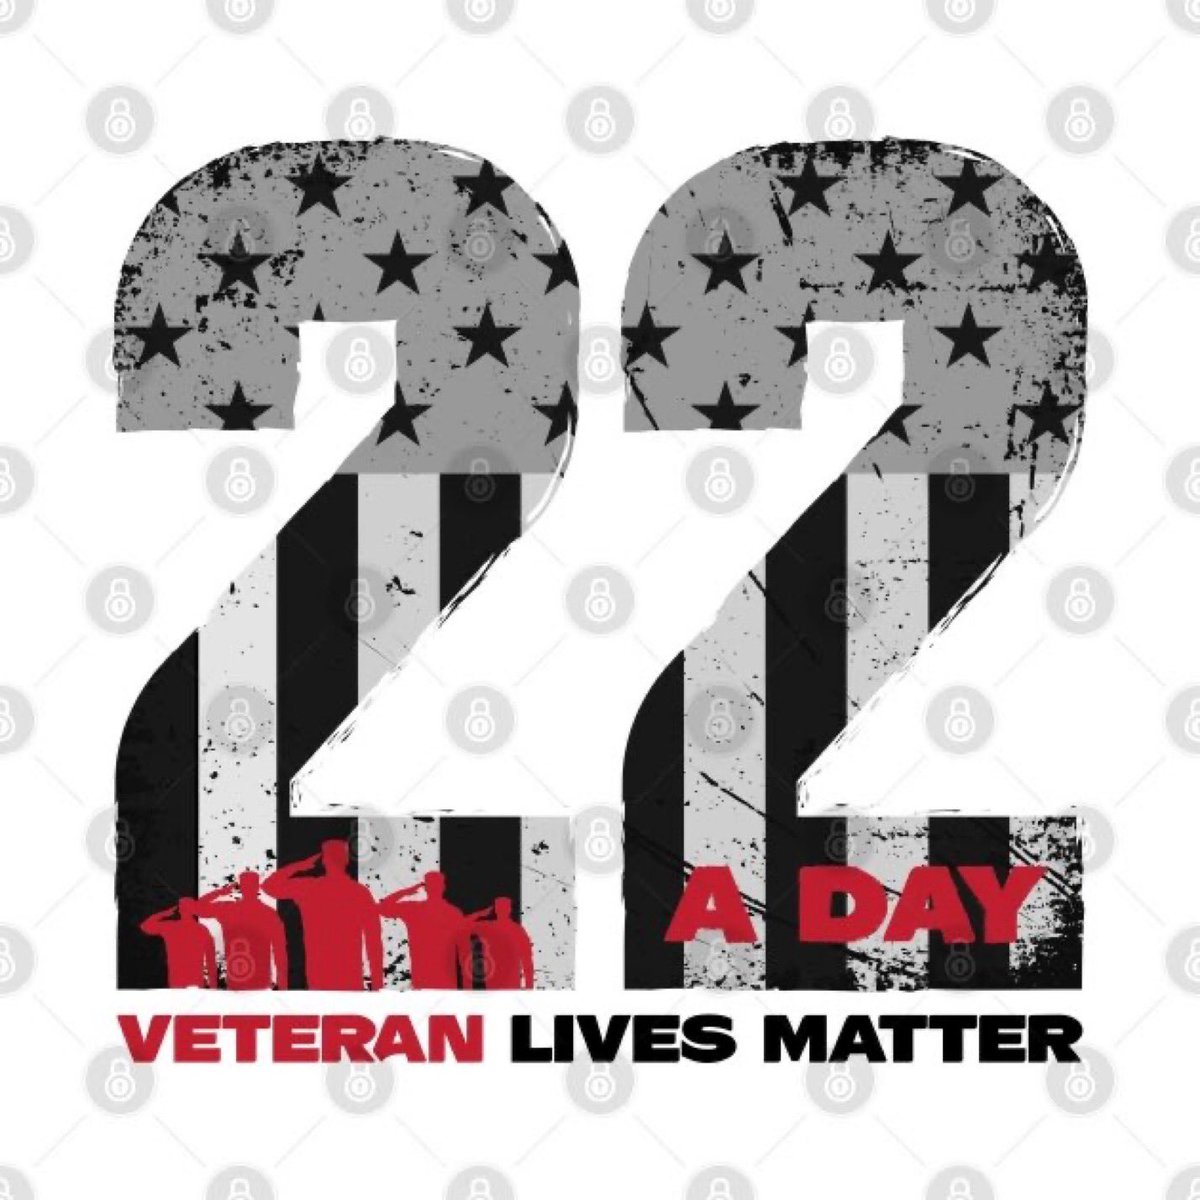 #ThankfulThursdayMorning #BuddyChecksMatter #BuddyChecks to #Veterans #BuddyCheckers👇#turn22to0 
🇺🇸@Snoexception1 @NelisonDarin @941Rickster @jims7493⭐️
🇺🇸@draven66791 @RogerMcghee6 @WooPig83 @reeldonzi⭐️
🇺🇸@punisher0930 @Borderleegion1 @pigott24 @BTWelder⭐️
🇺🇸@chris1973hunter⭐️